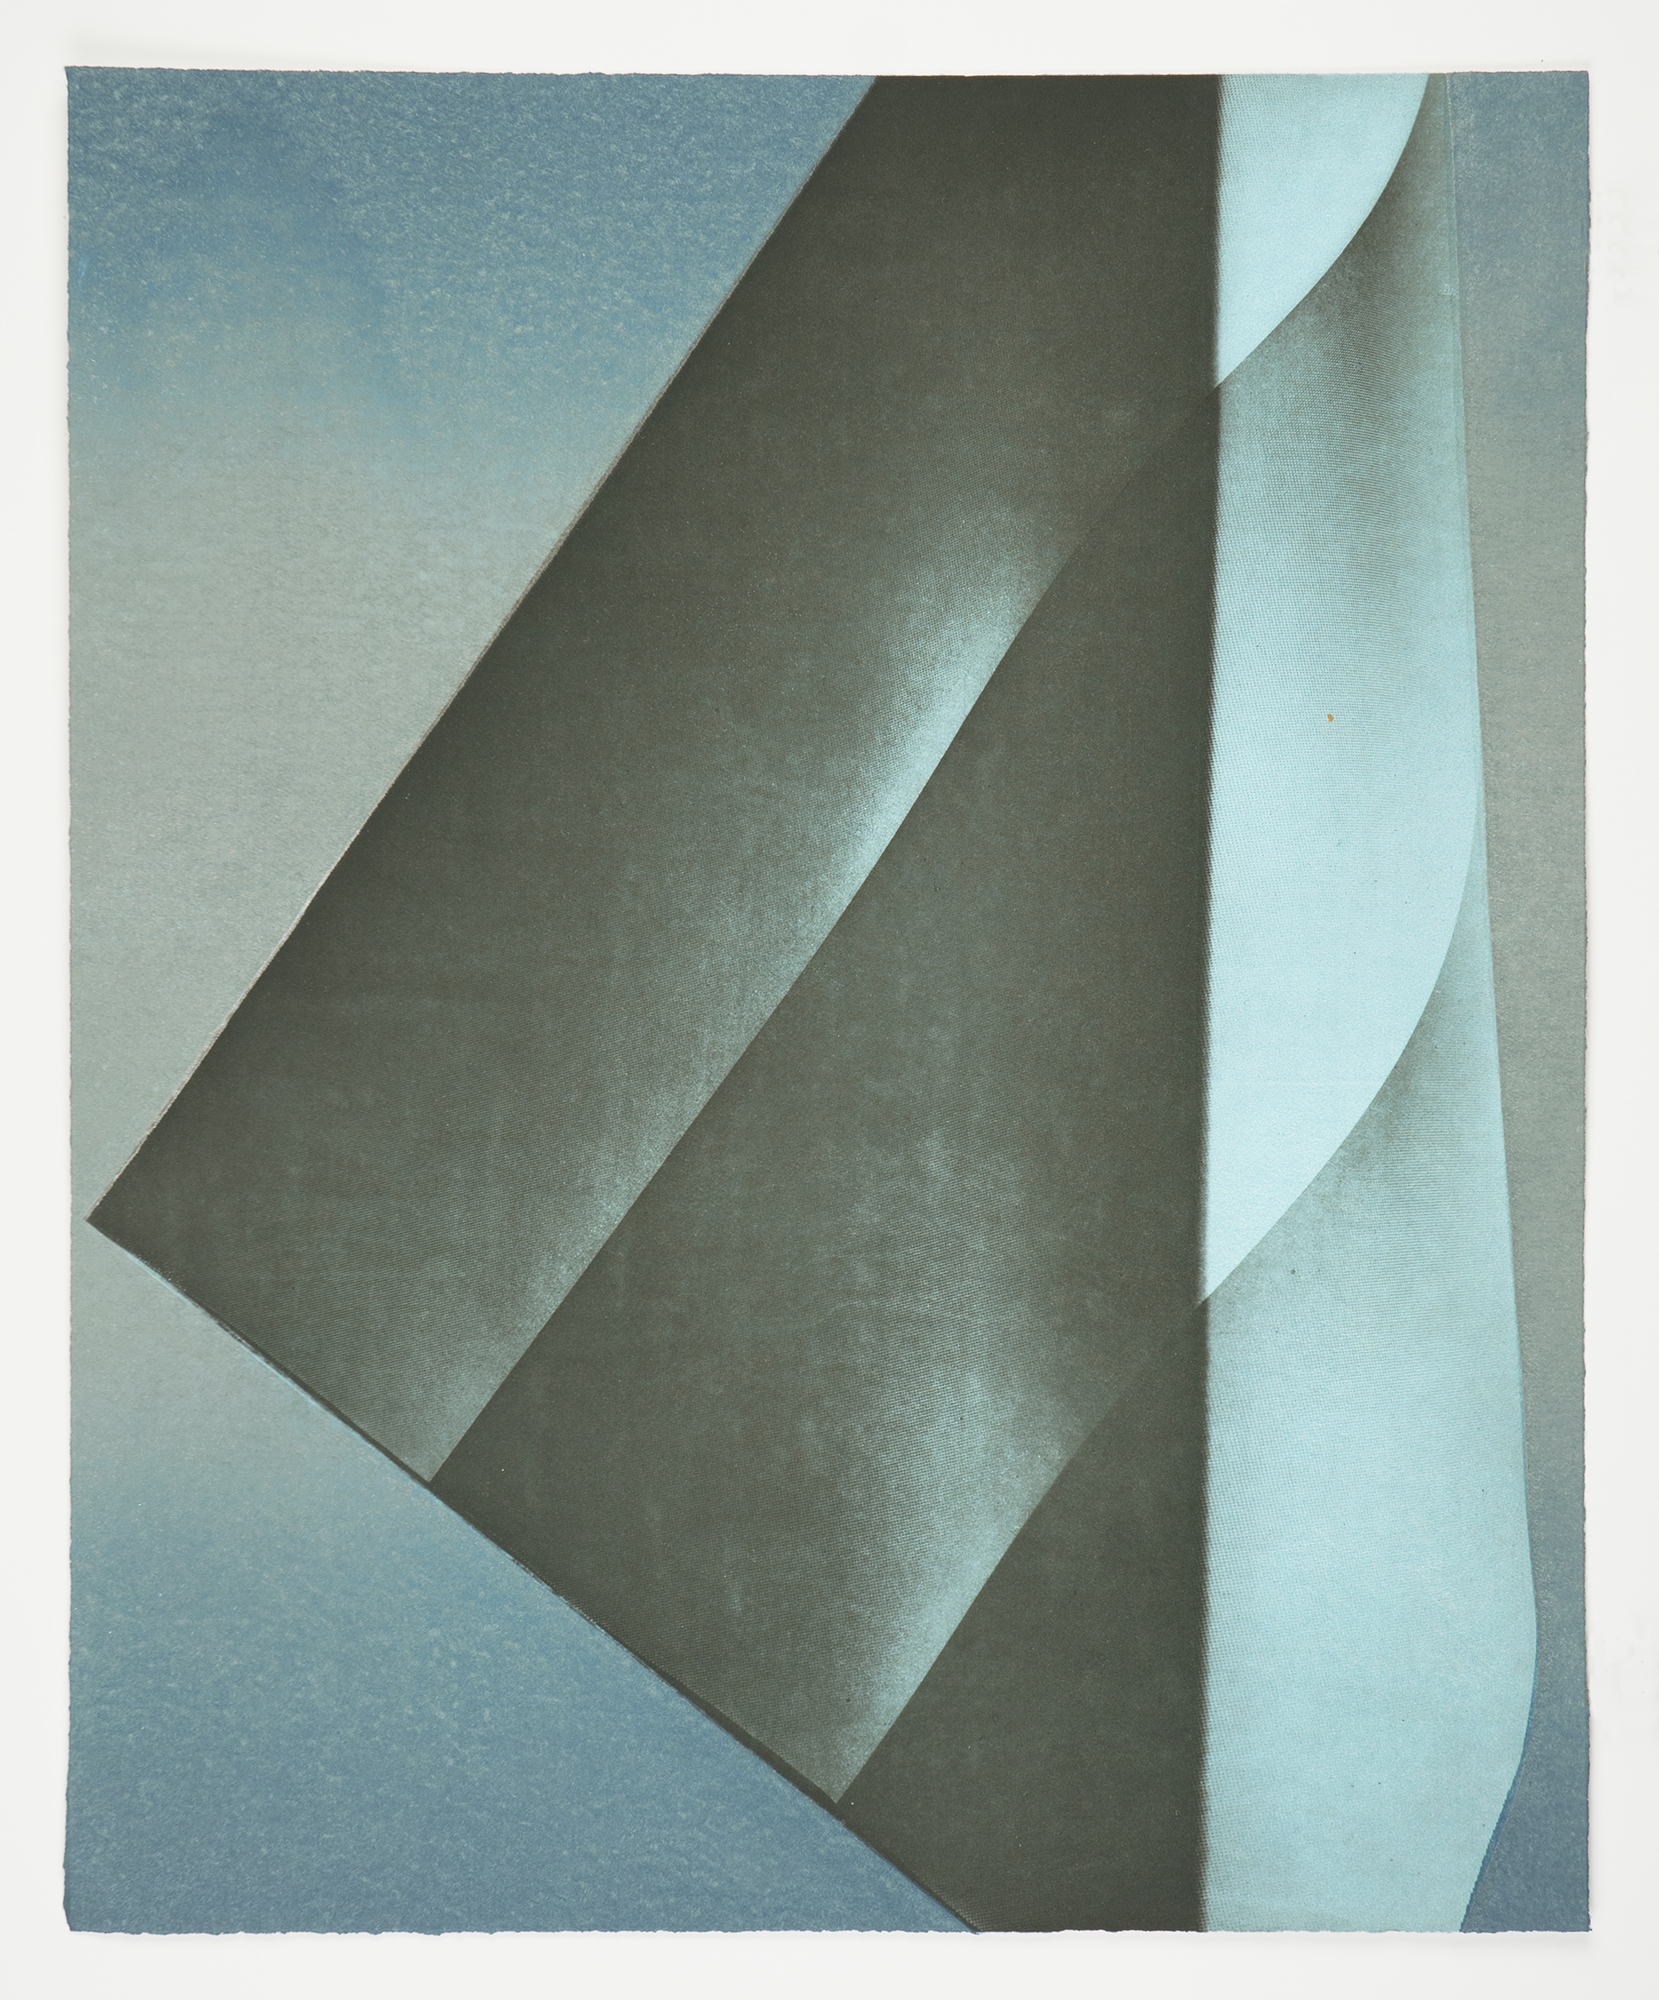 Kate Petley: "Marker 11" 2022. Photogravure monoprint on Hahnemühle Copperplate paper, 24.75" x 20.25". Published by Manneken Press.